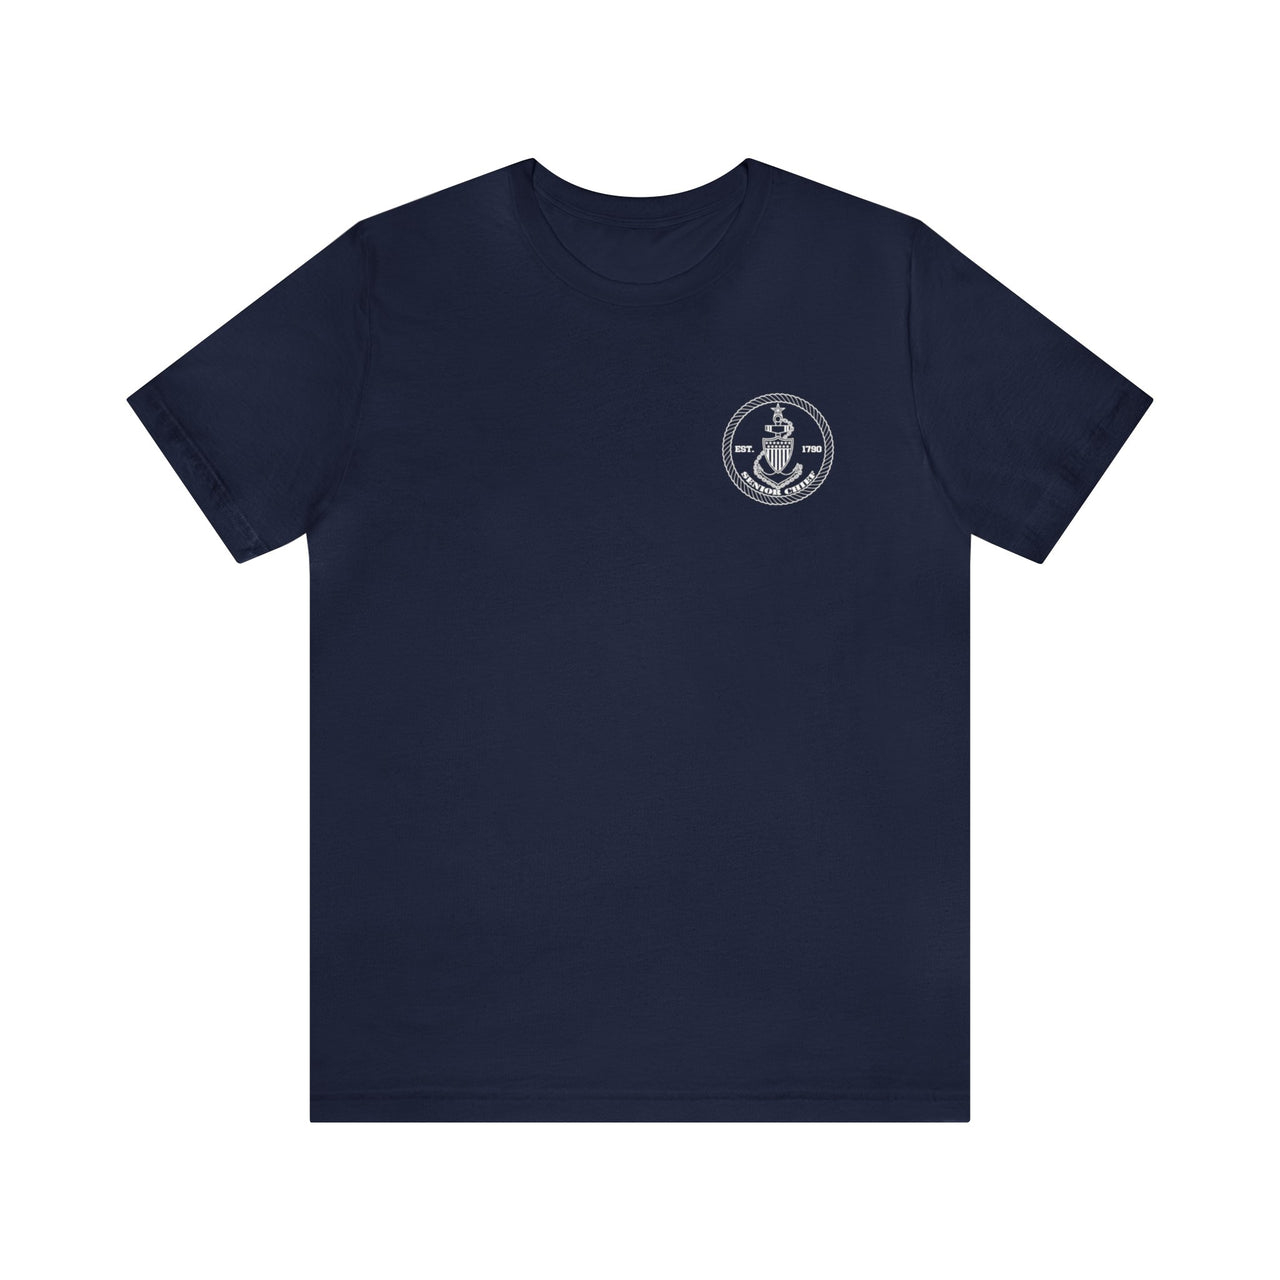 Coast Guard Senior Chief T-Shirt 1790 (White)